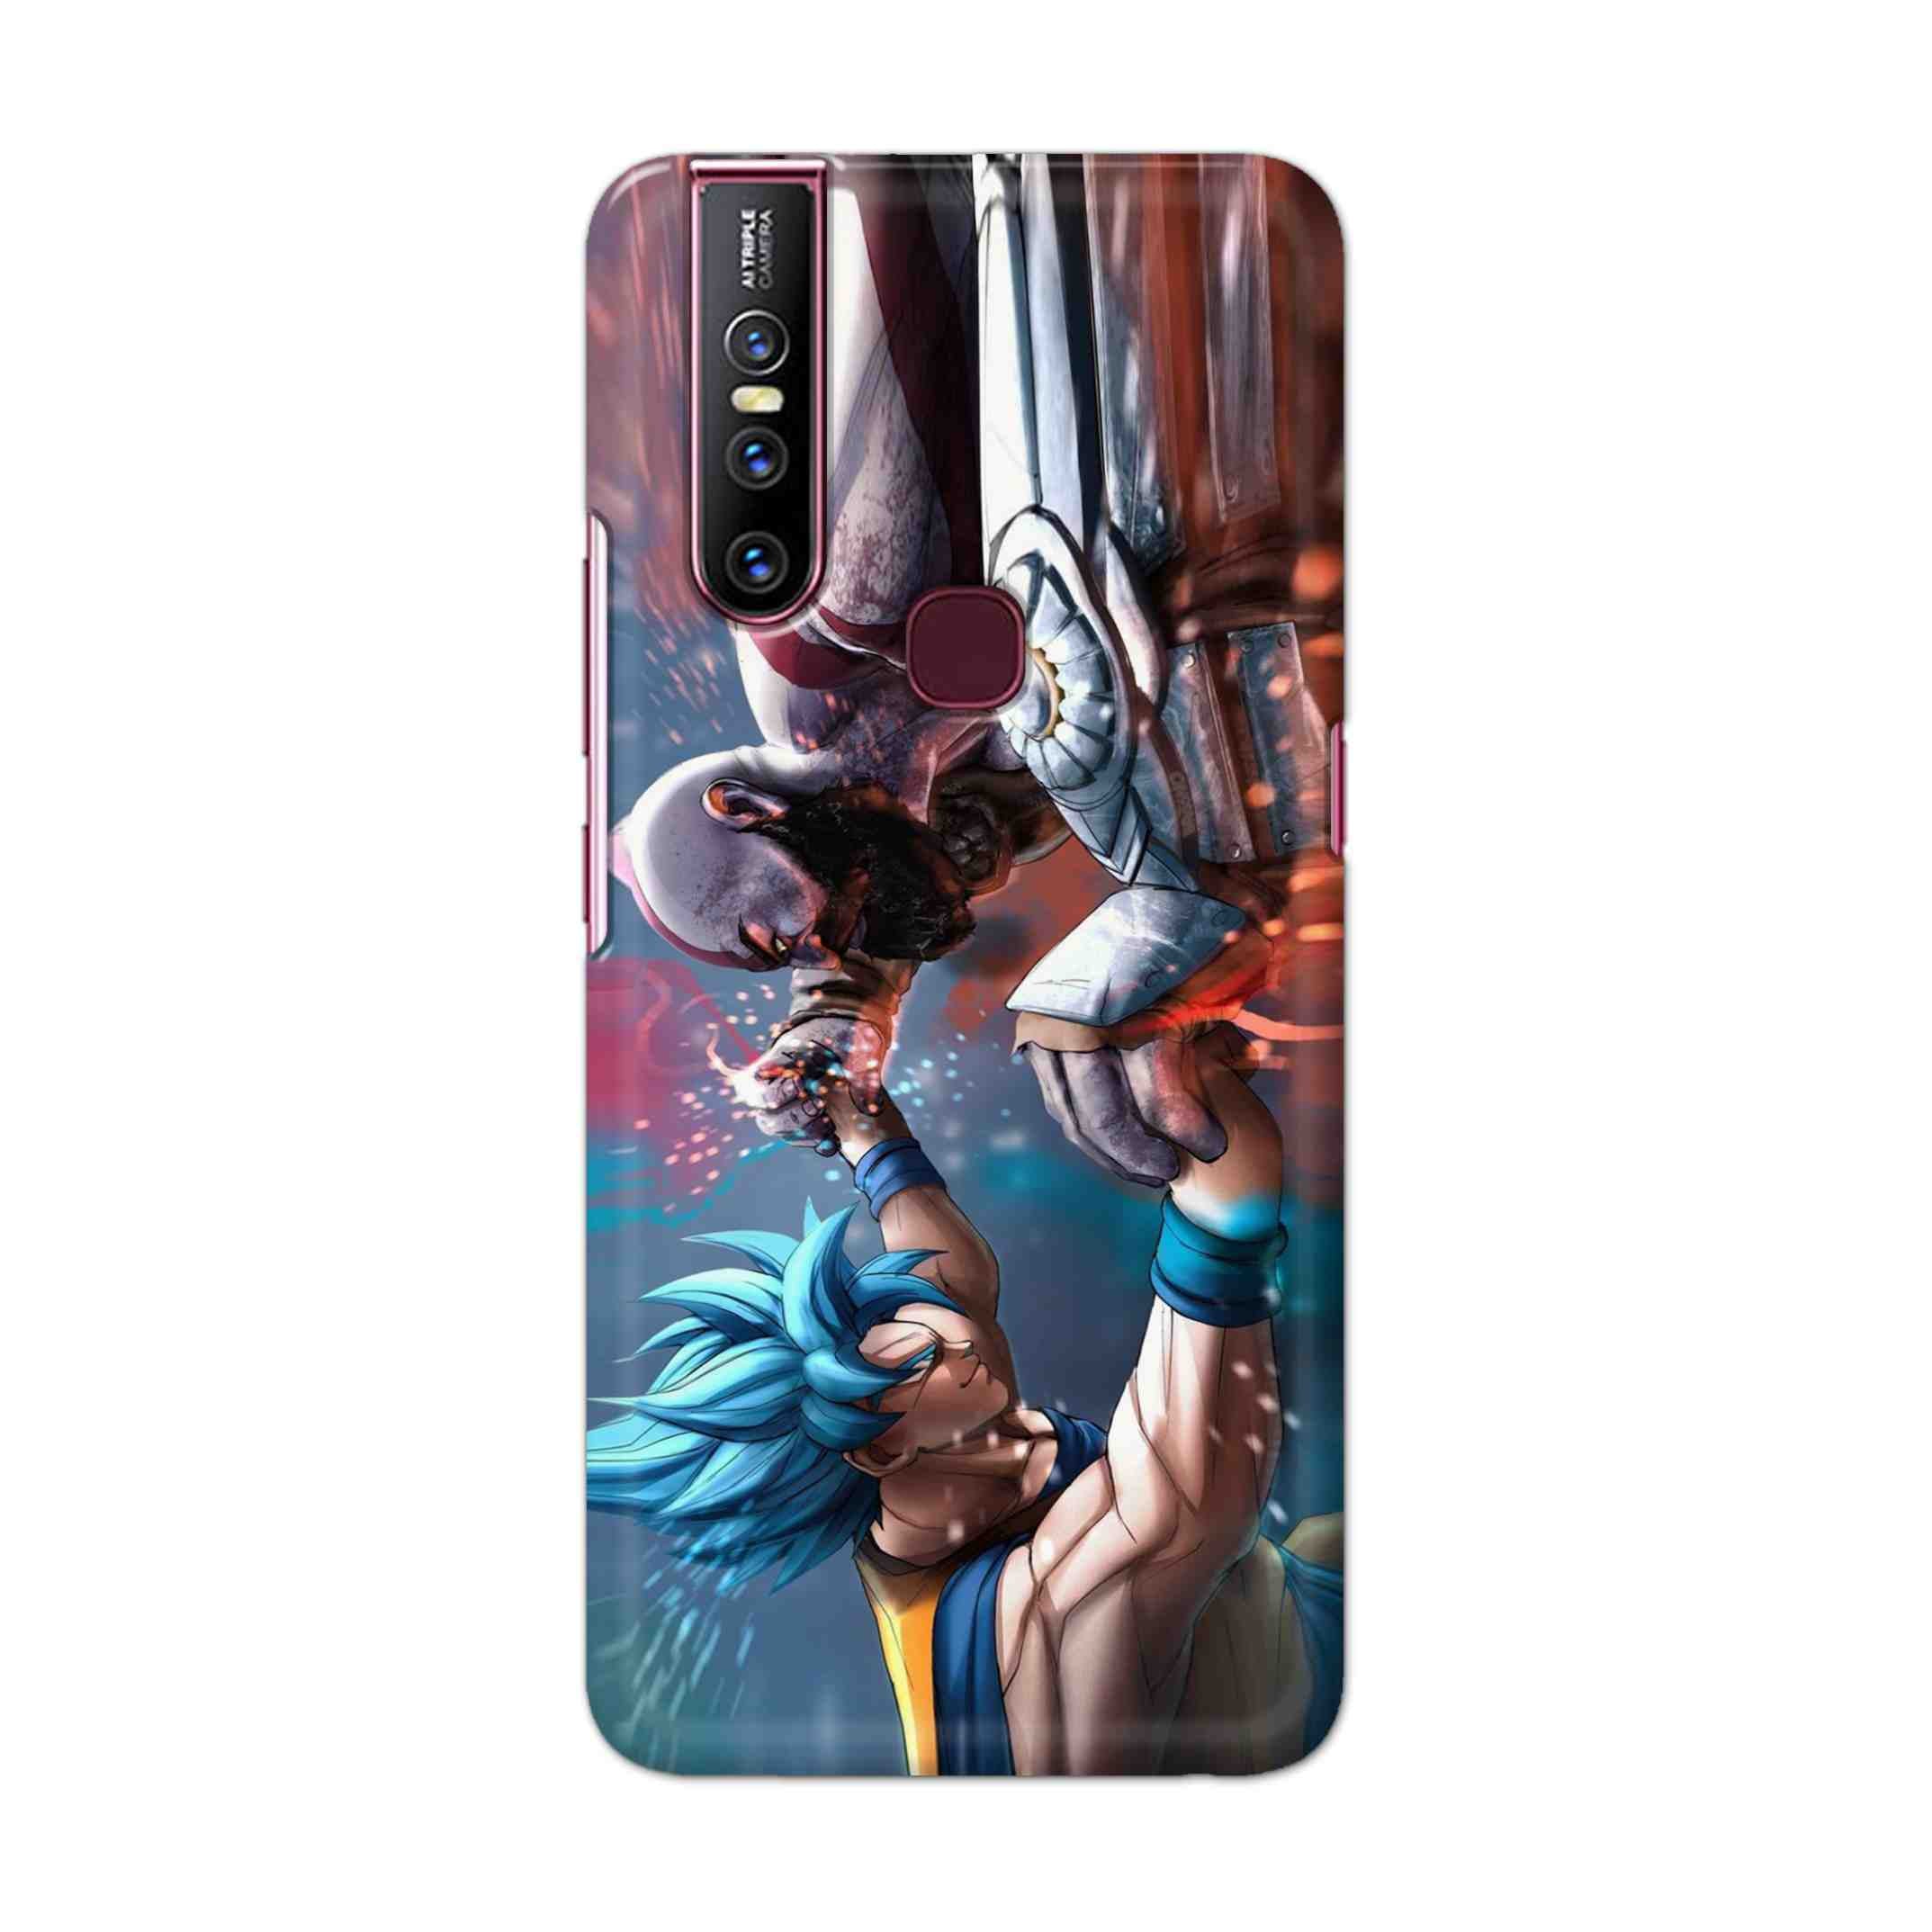 Buy Goku Vs Kratos Hard Back Mobile Phone Case Cover For Vivo V15 Online